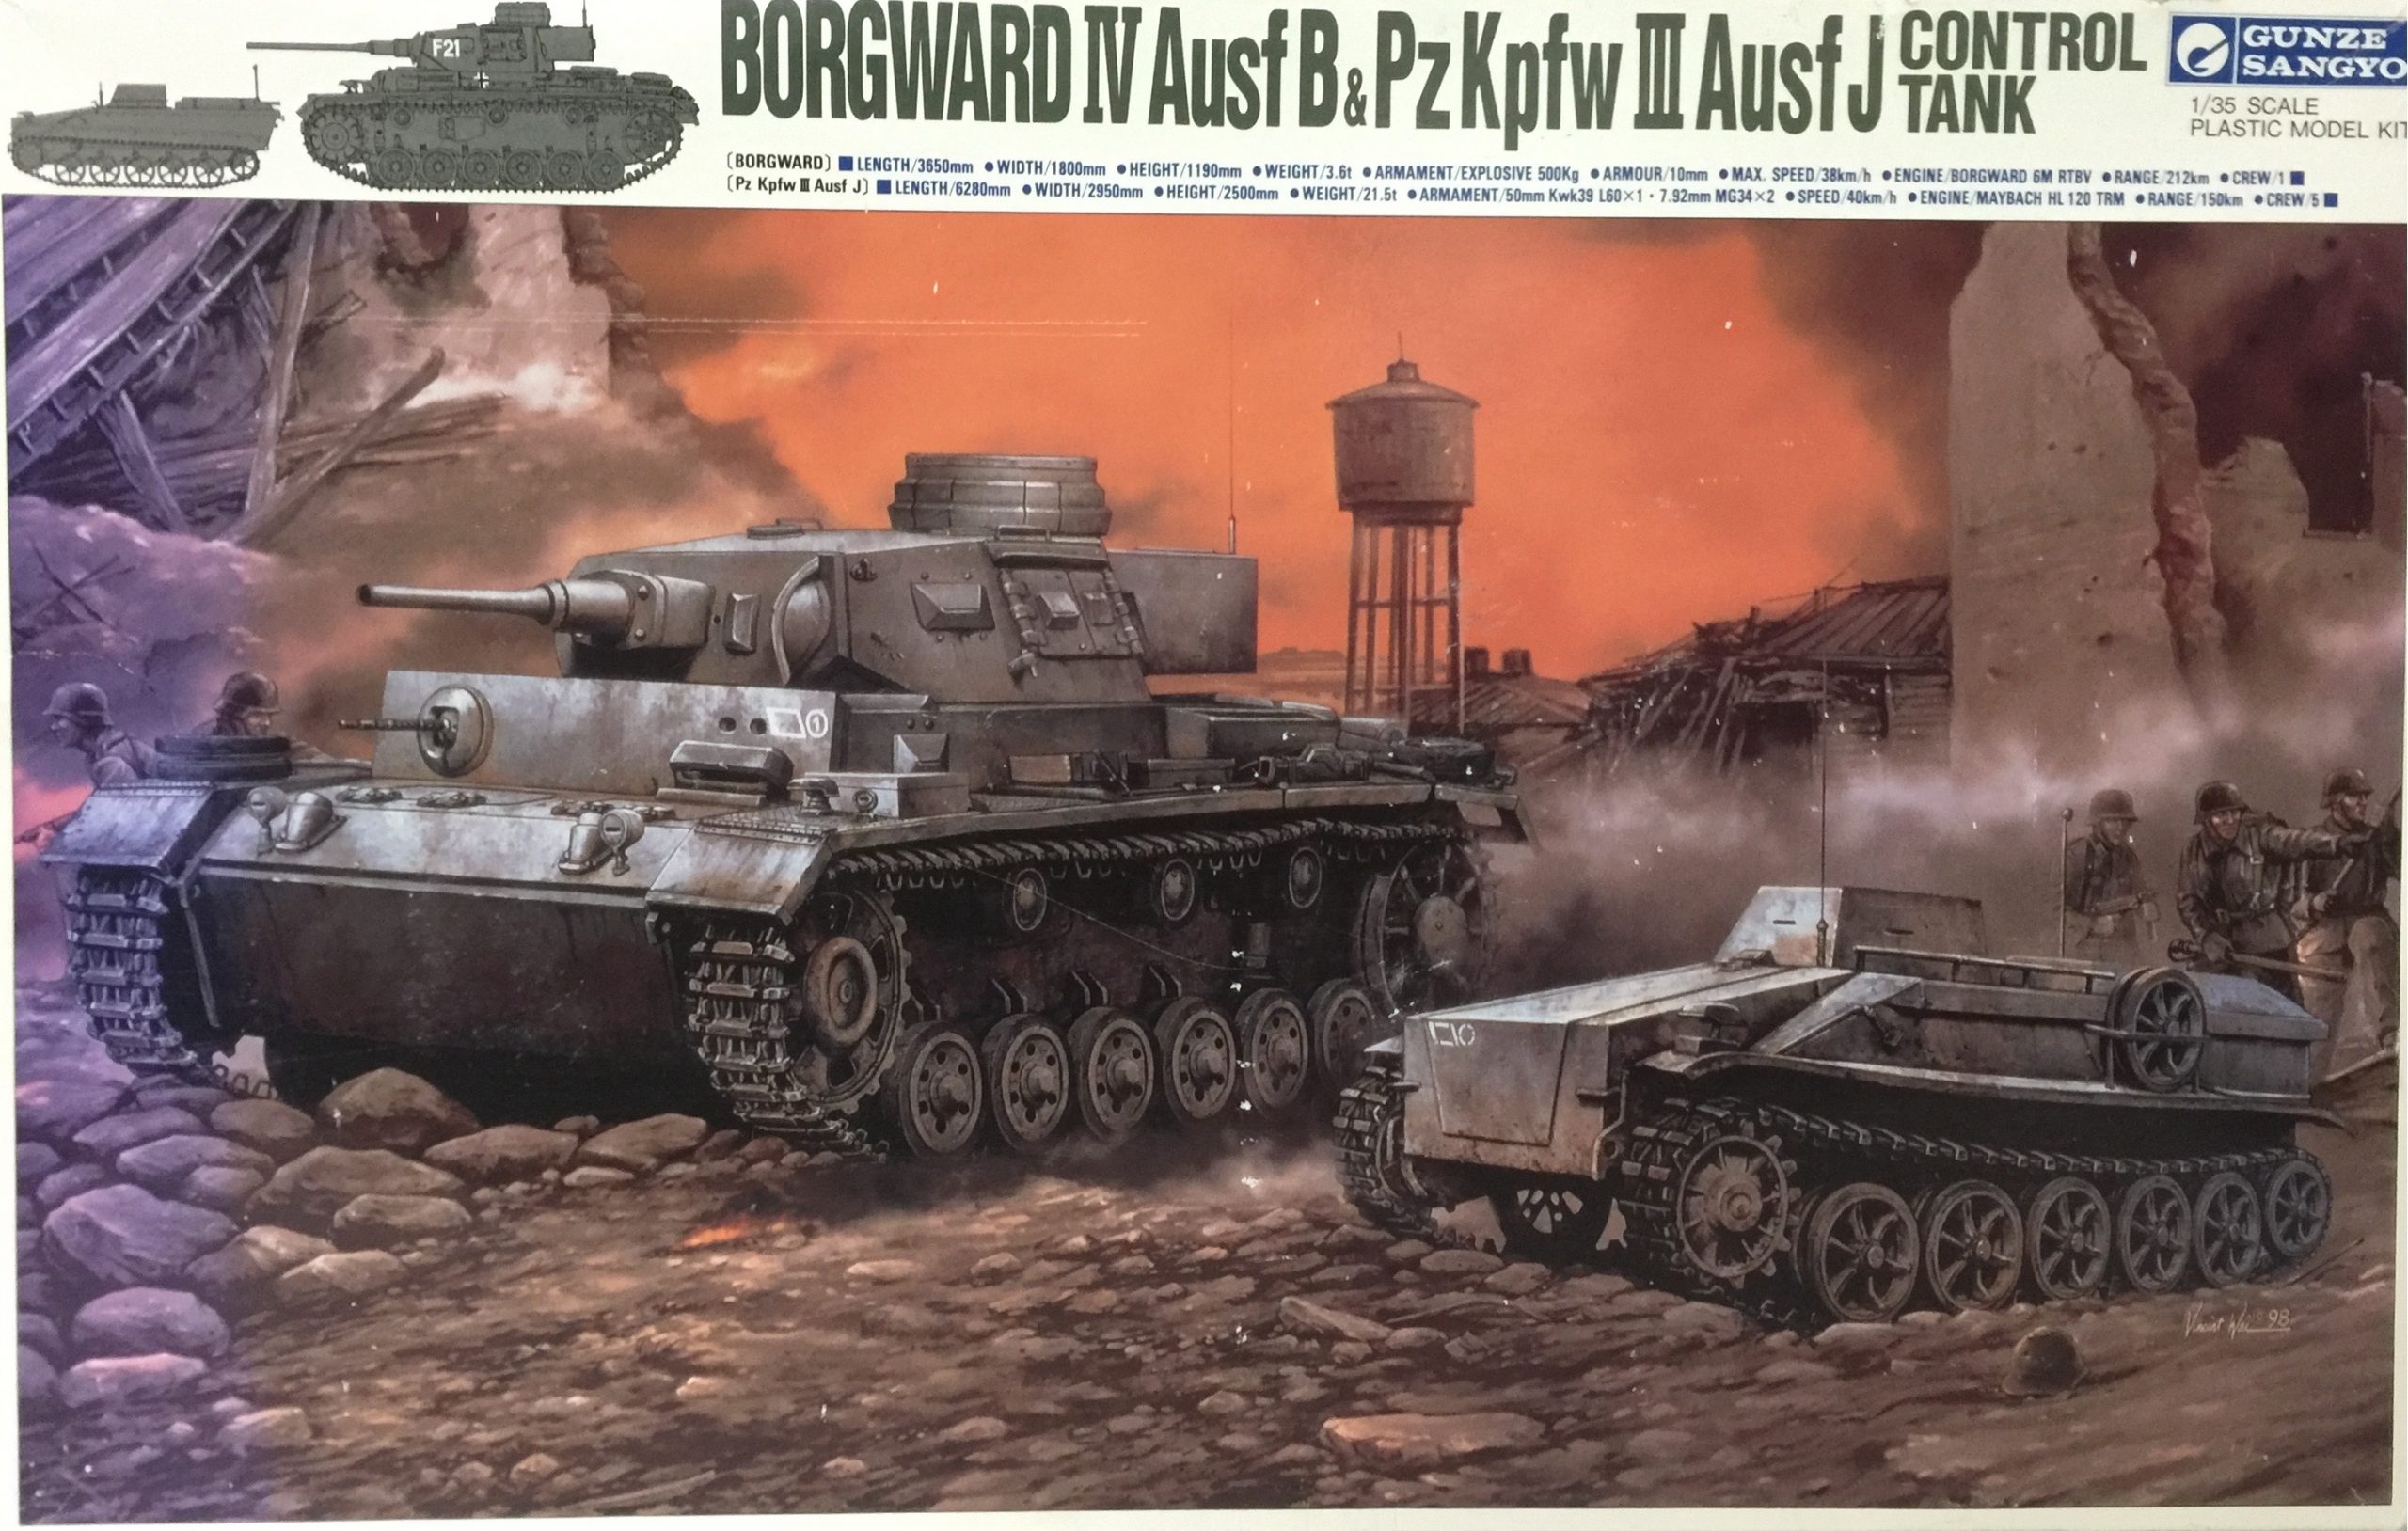 Gunze Sangyo Borgward IV Ausf B & PzKpfw III Ausf J Control Tank Ref 788 Escala 1/35